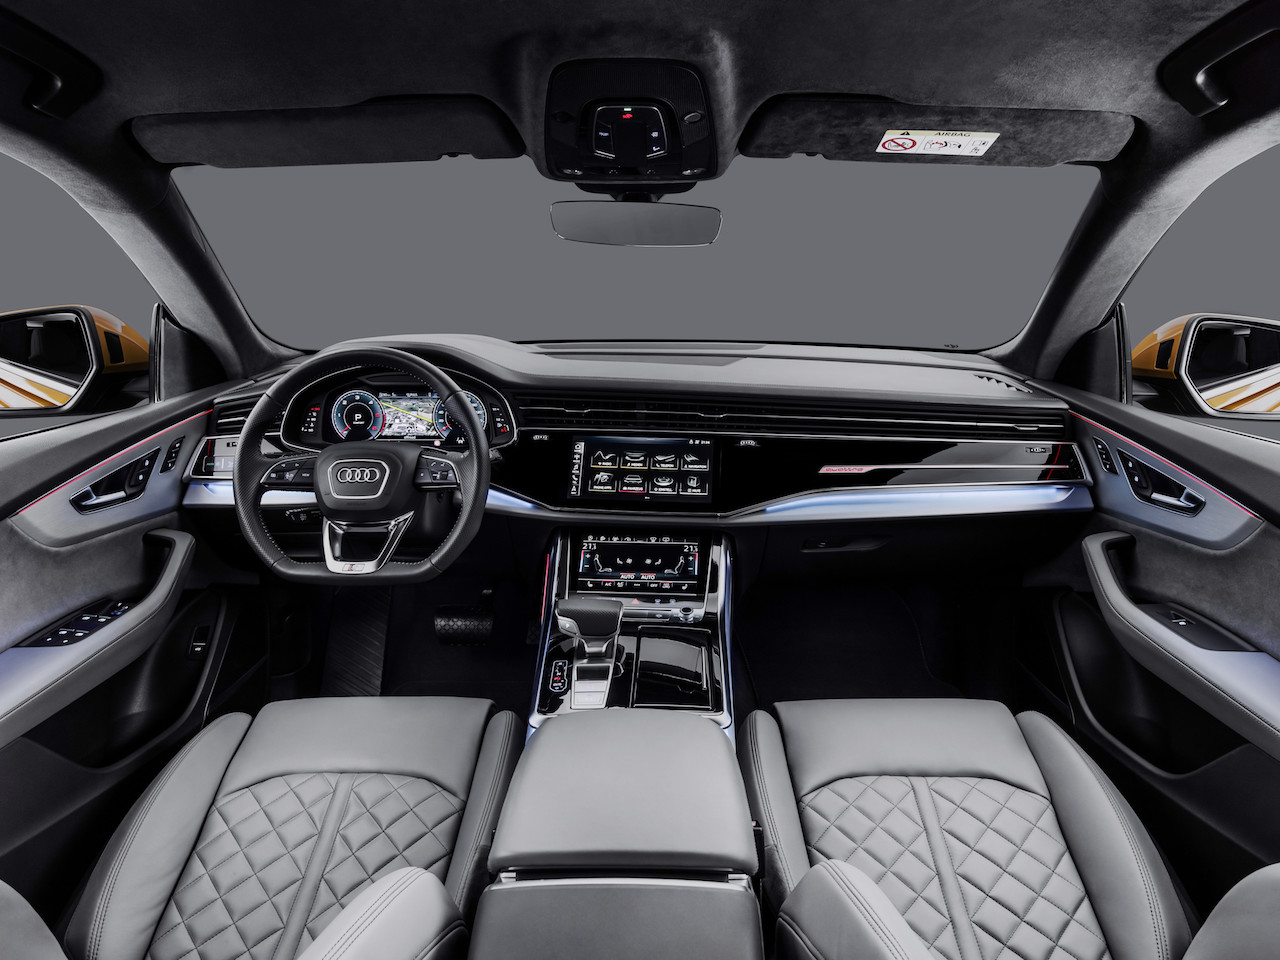 Audi Q8 interior dashboard